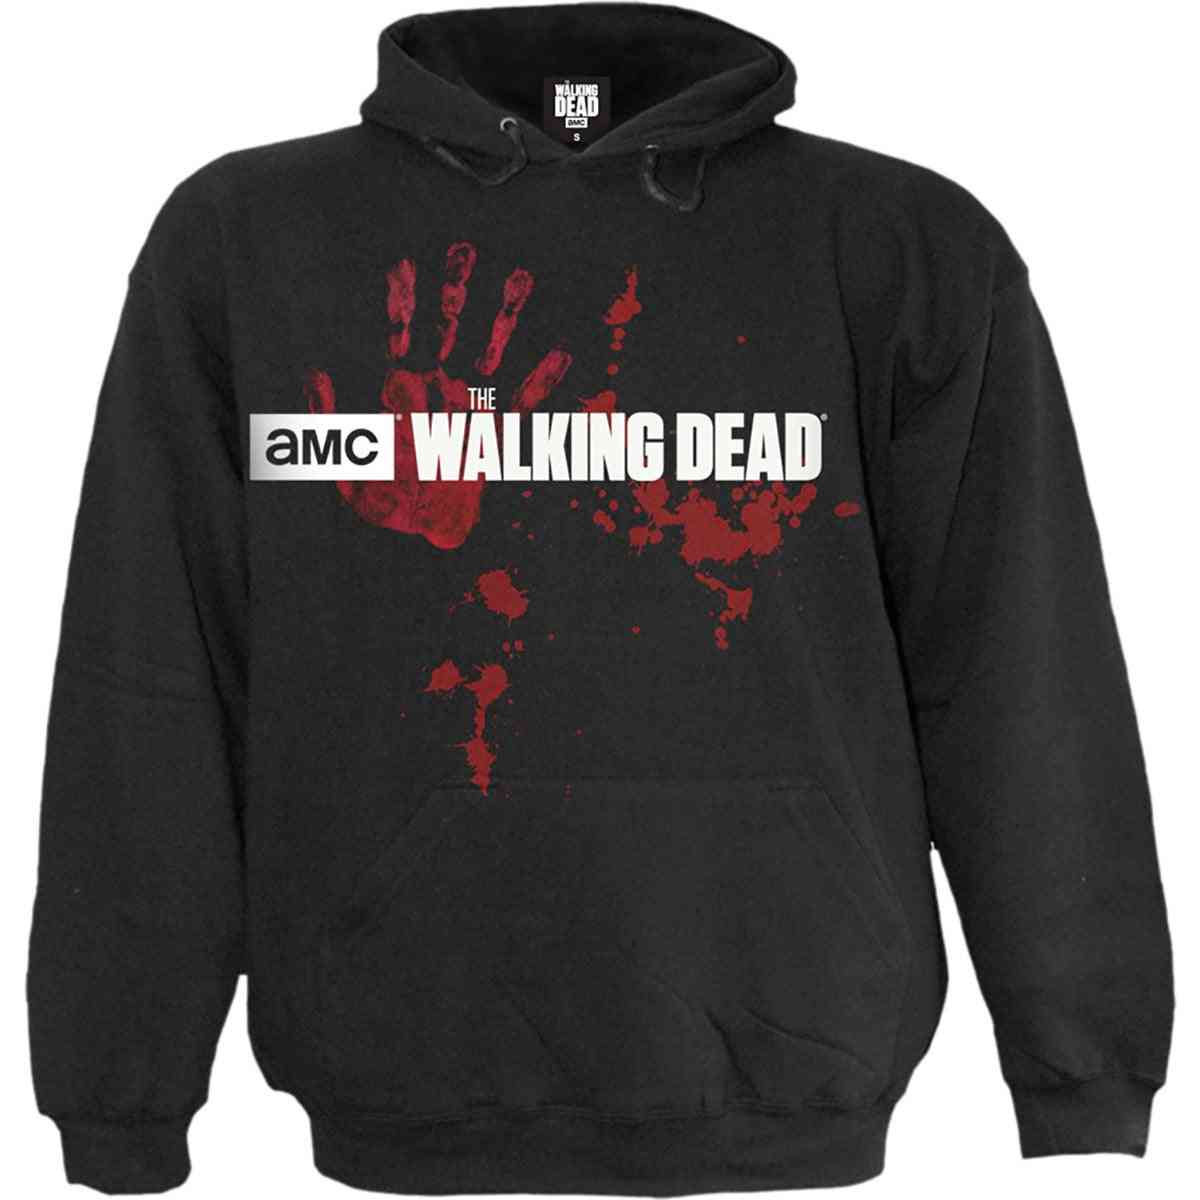 Zombie horde - walking dead svart hoody